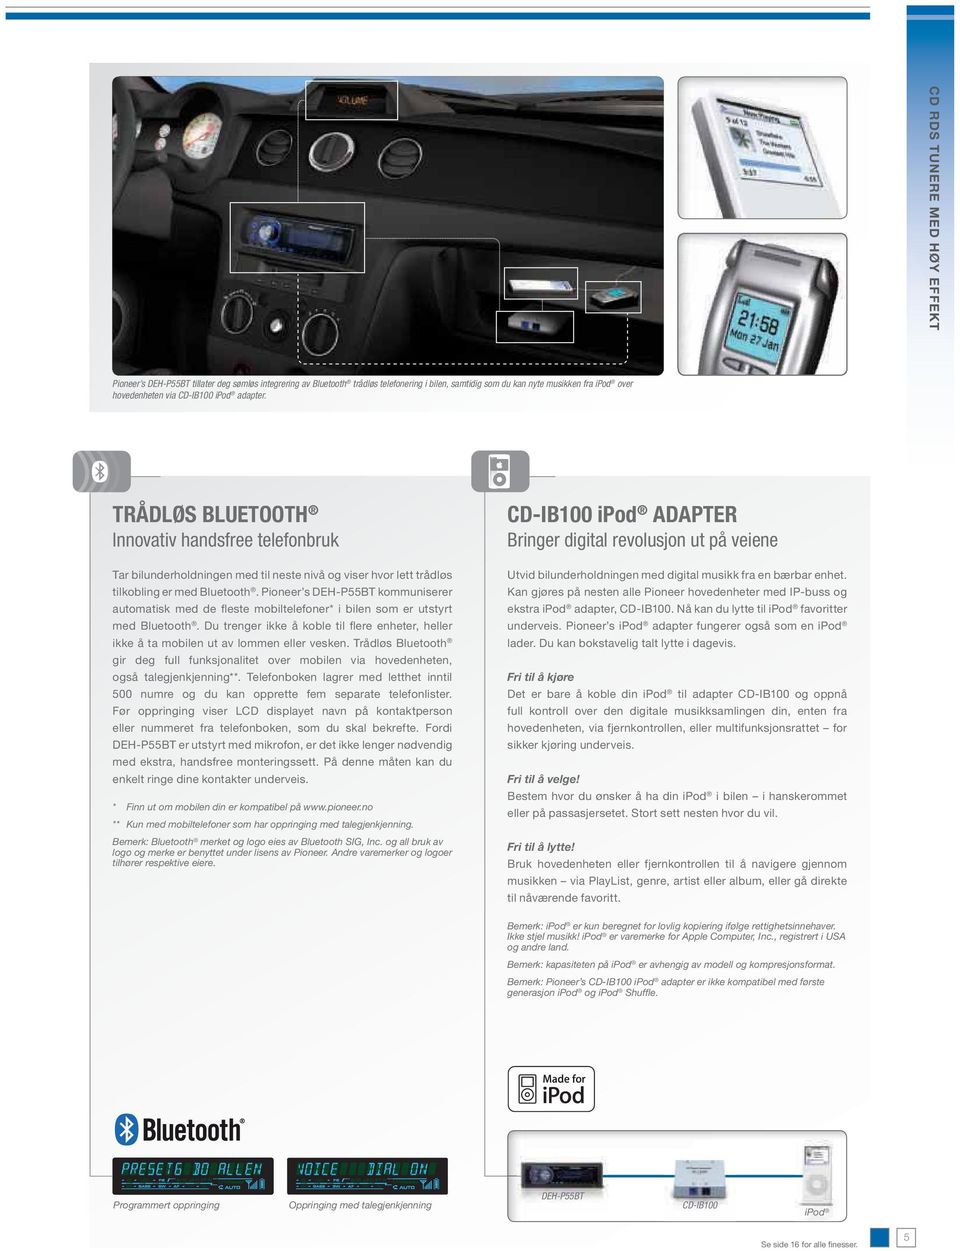 Pioneer s DEH-P55BT kommuniserer automatisk med de fl este mobiltelefoner* i bilen som er utstyrt med Bluetooth.